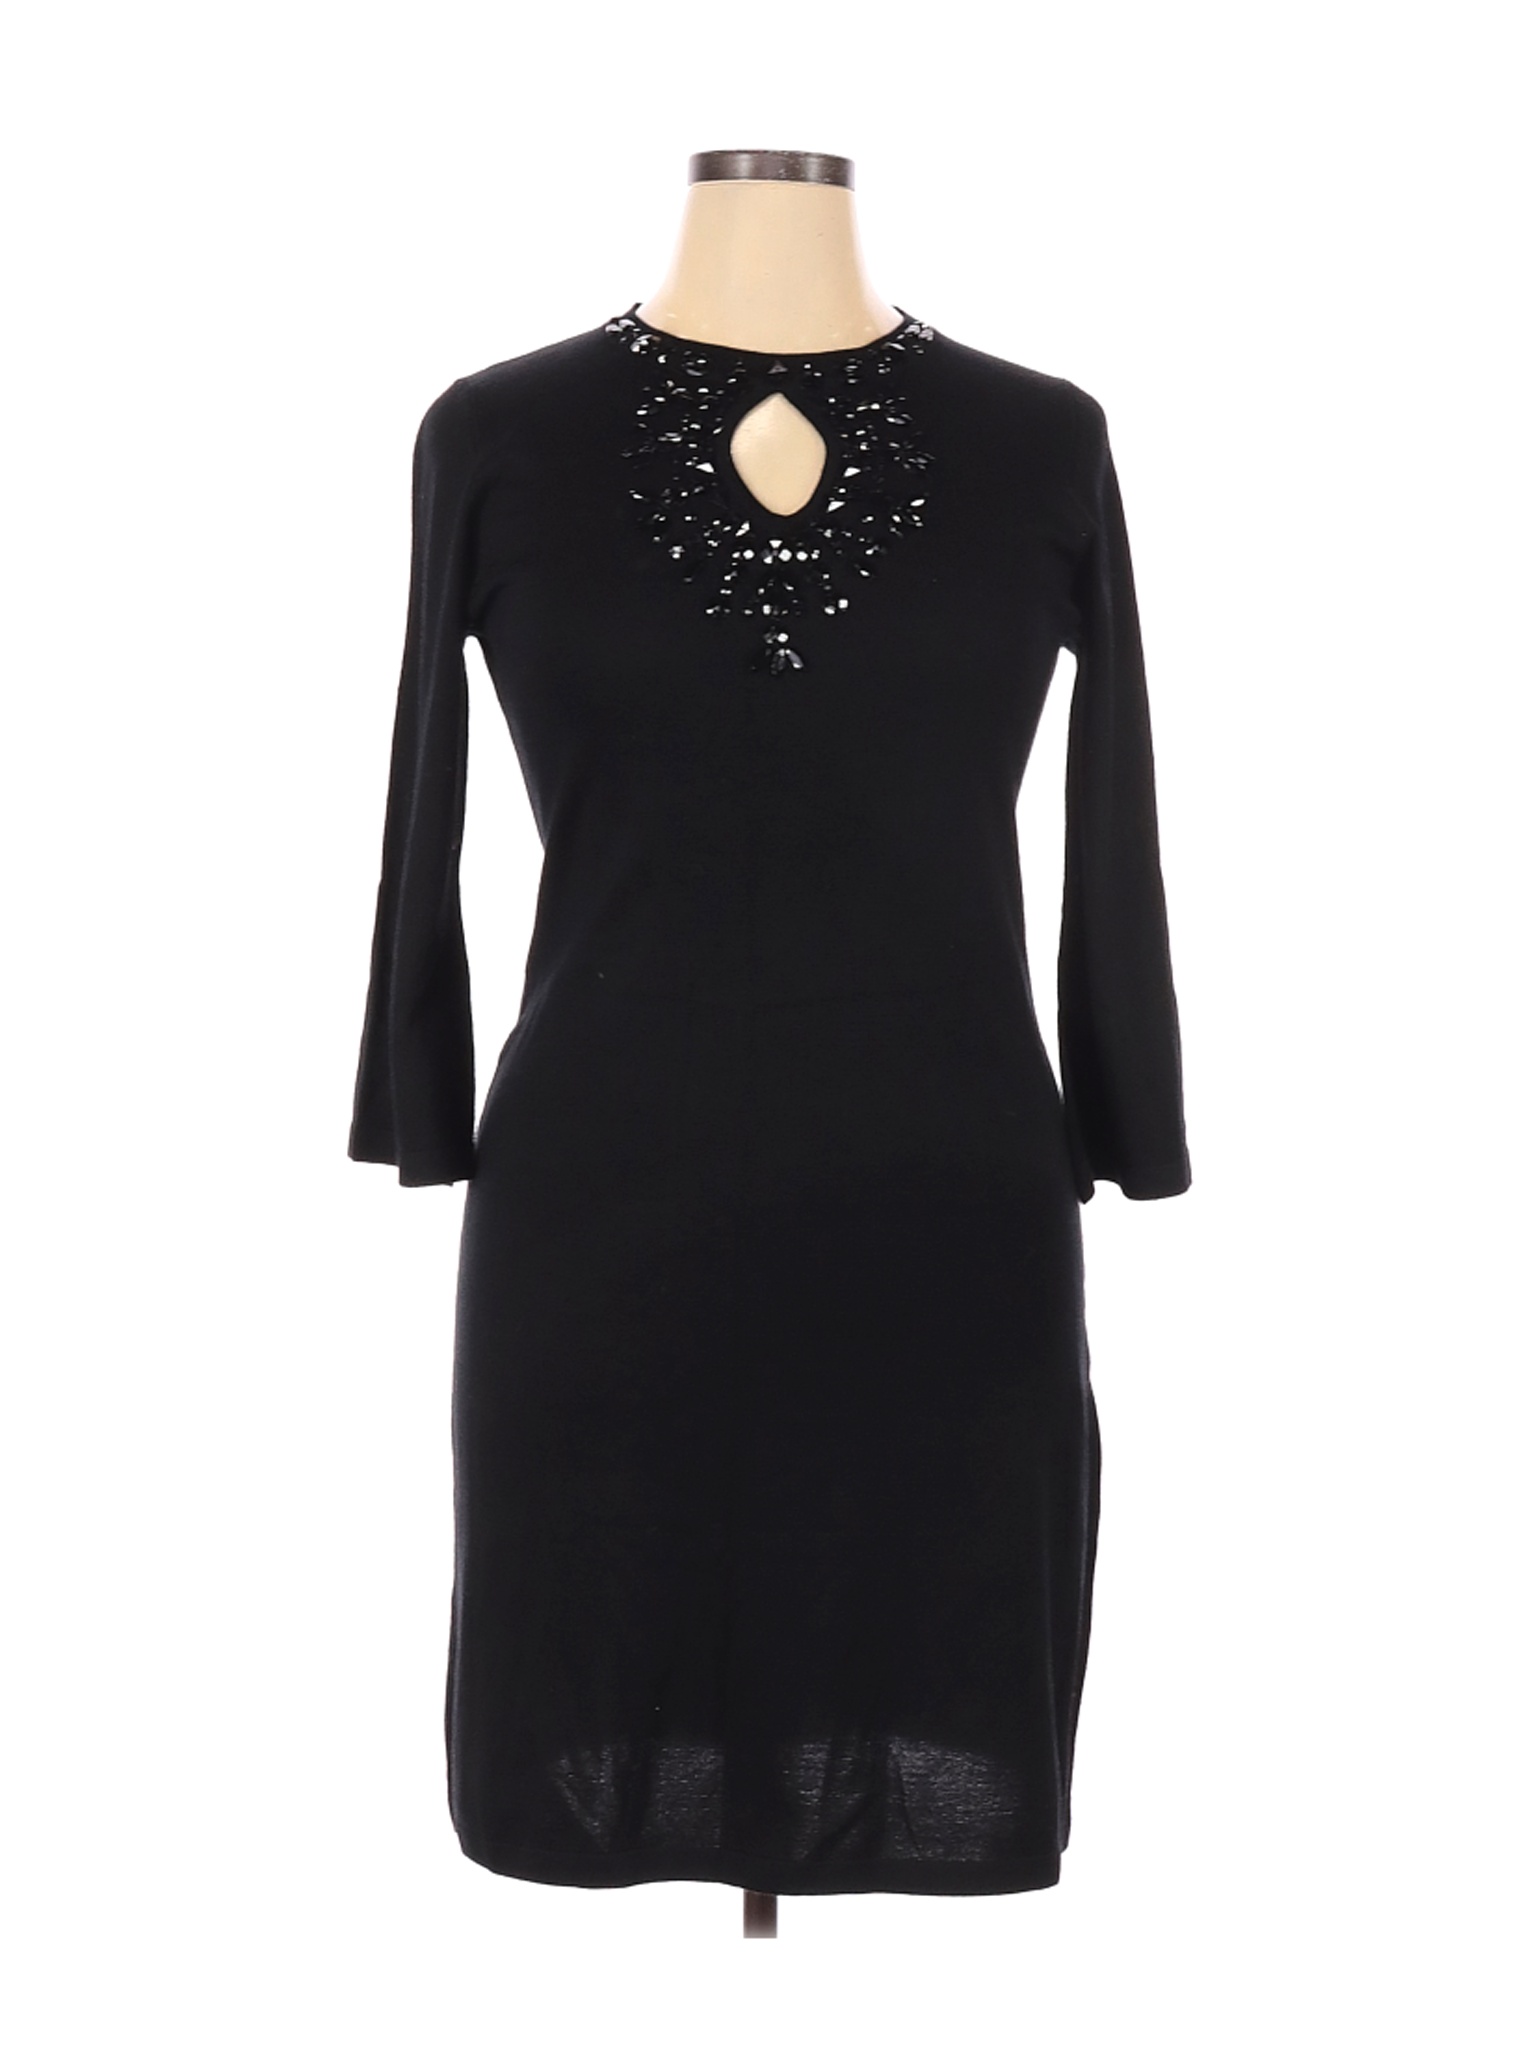 Melrose Chic Women Black Cocktail Dress XL | eBay